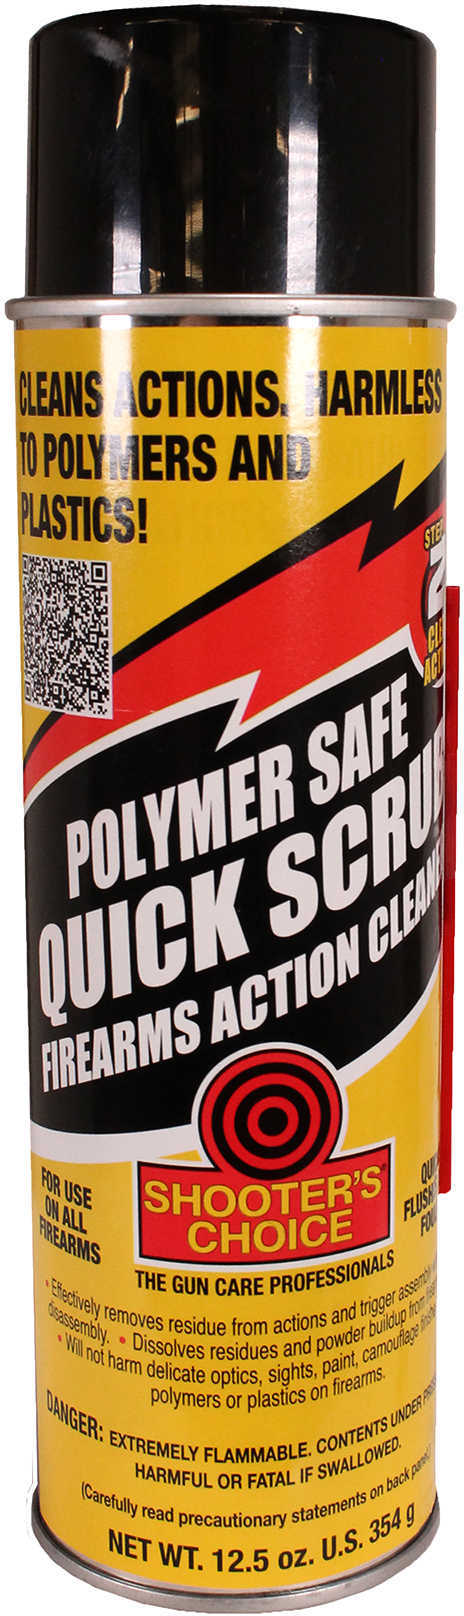 Shooters Choice PSQ Degreaser Polymer Safe 12Oz. Aerosol